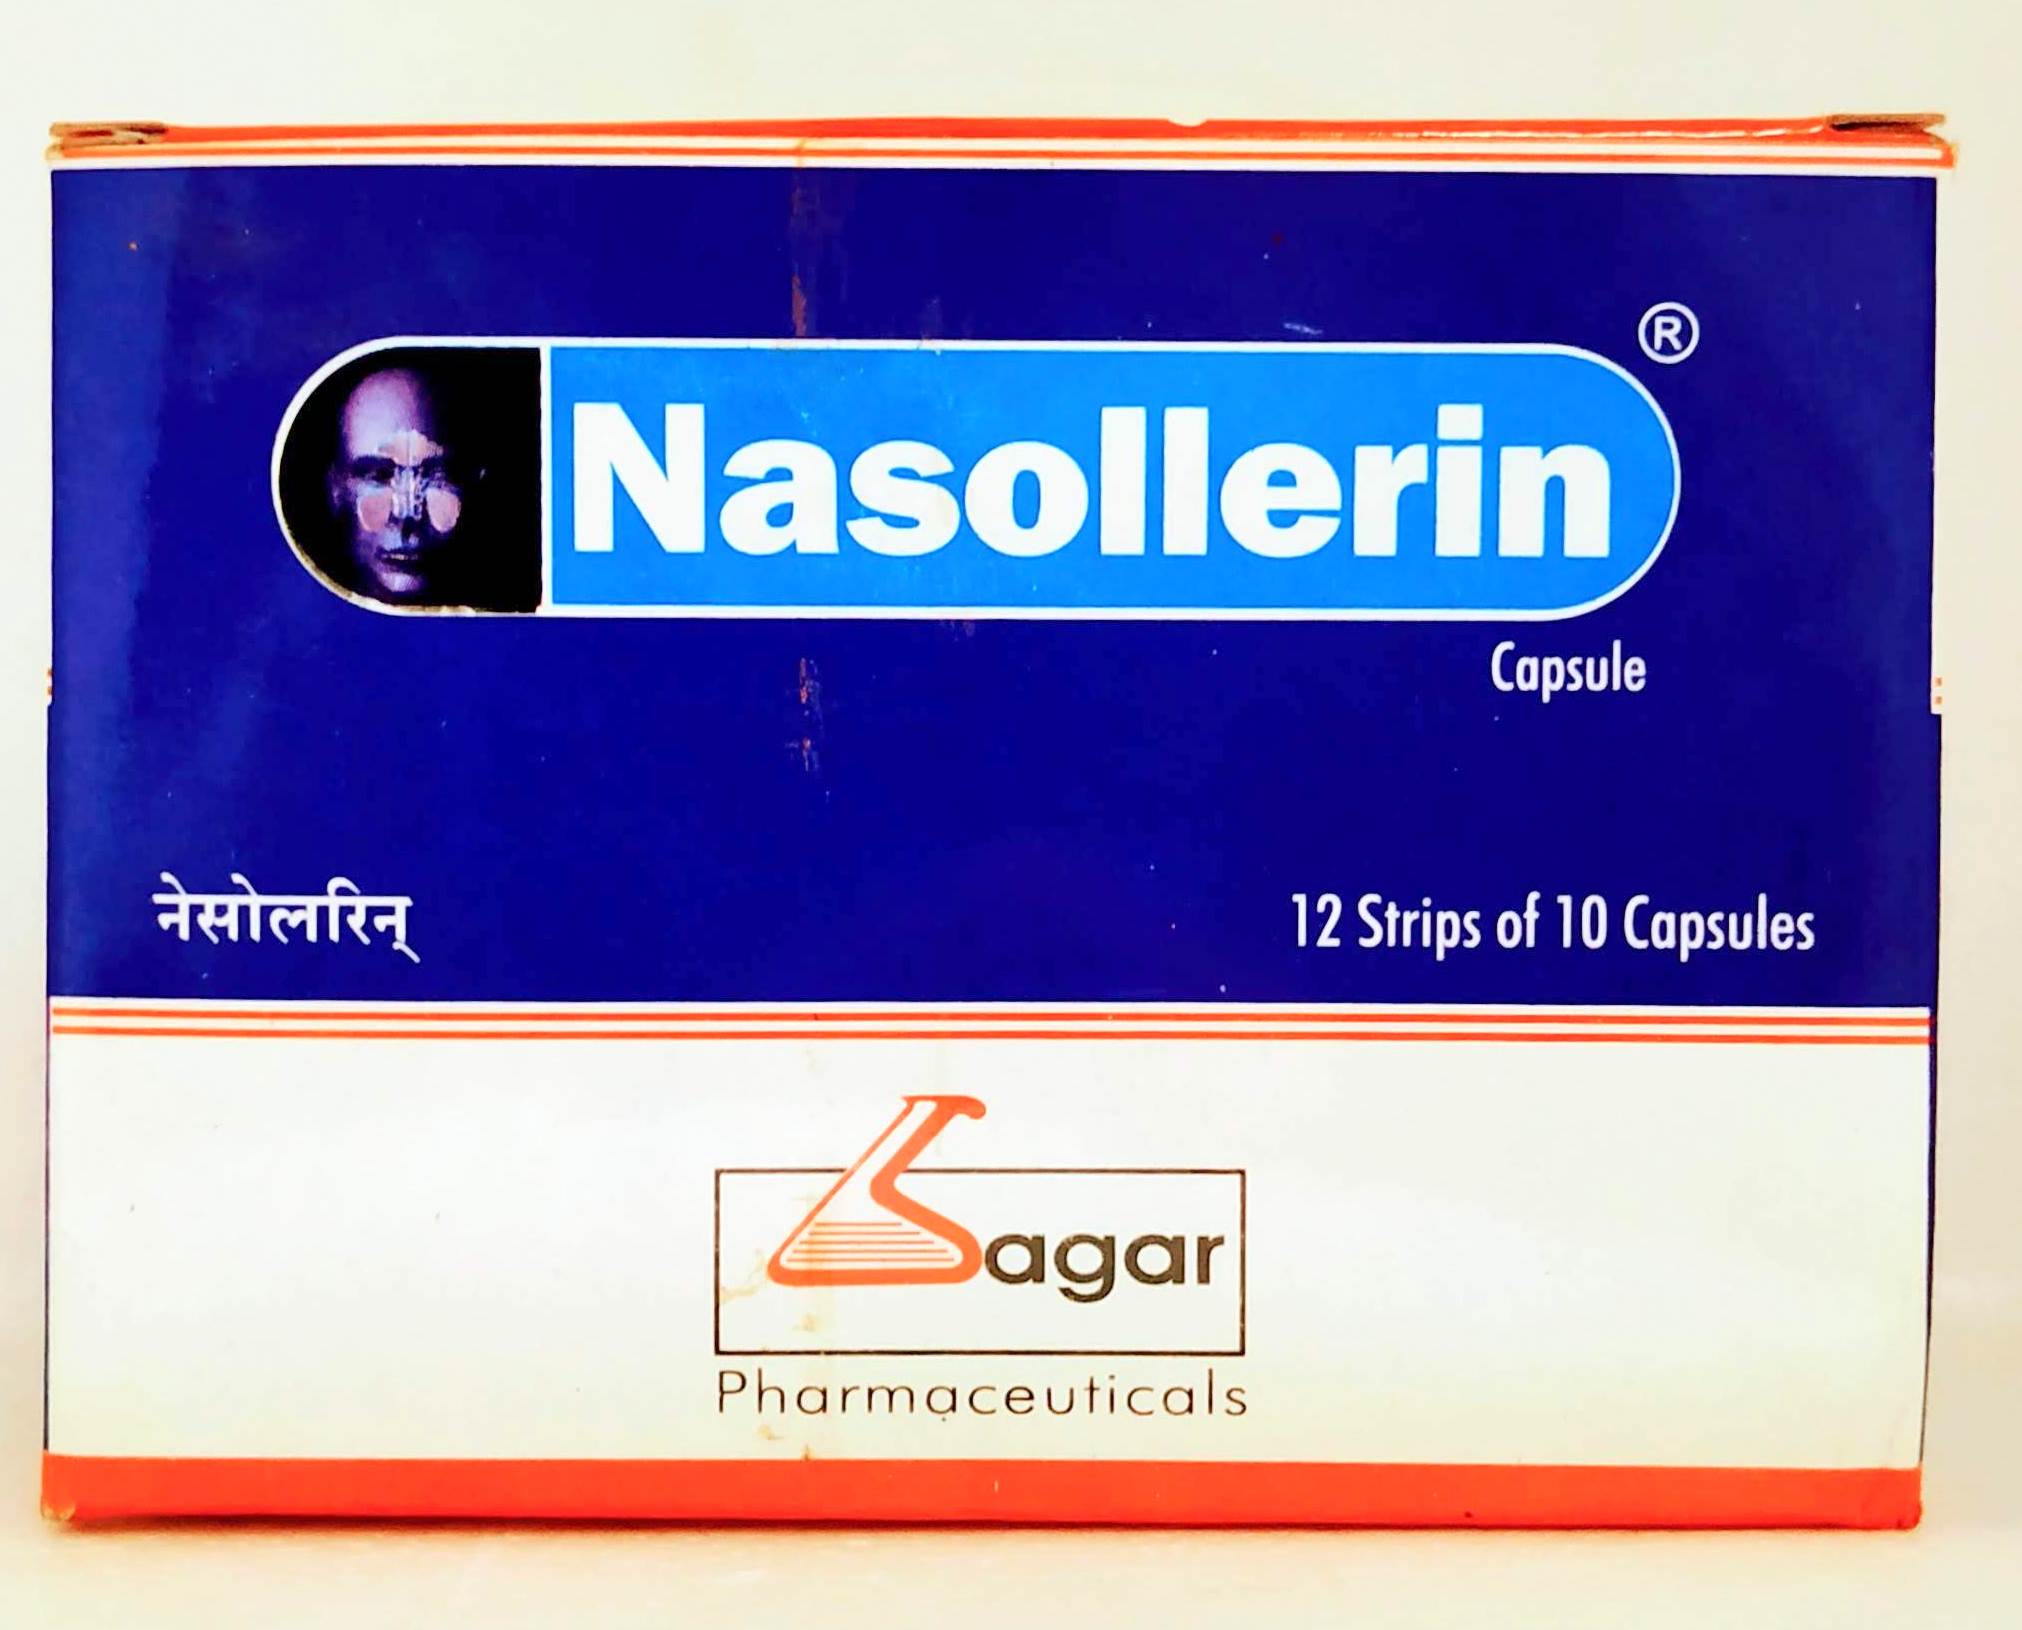 Shop Nasollerin capsules - 10Capsules at price 50.00 from Sagar Online - Ayush Care